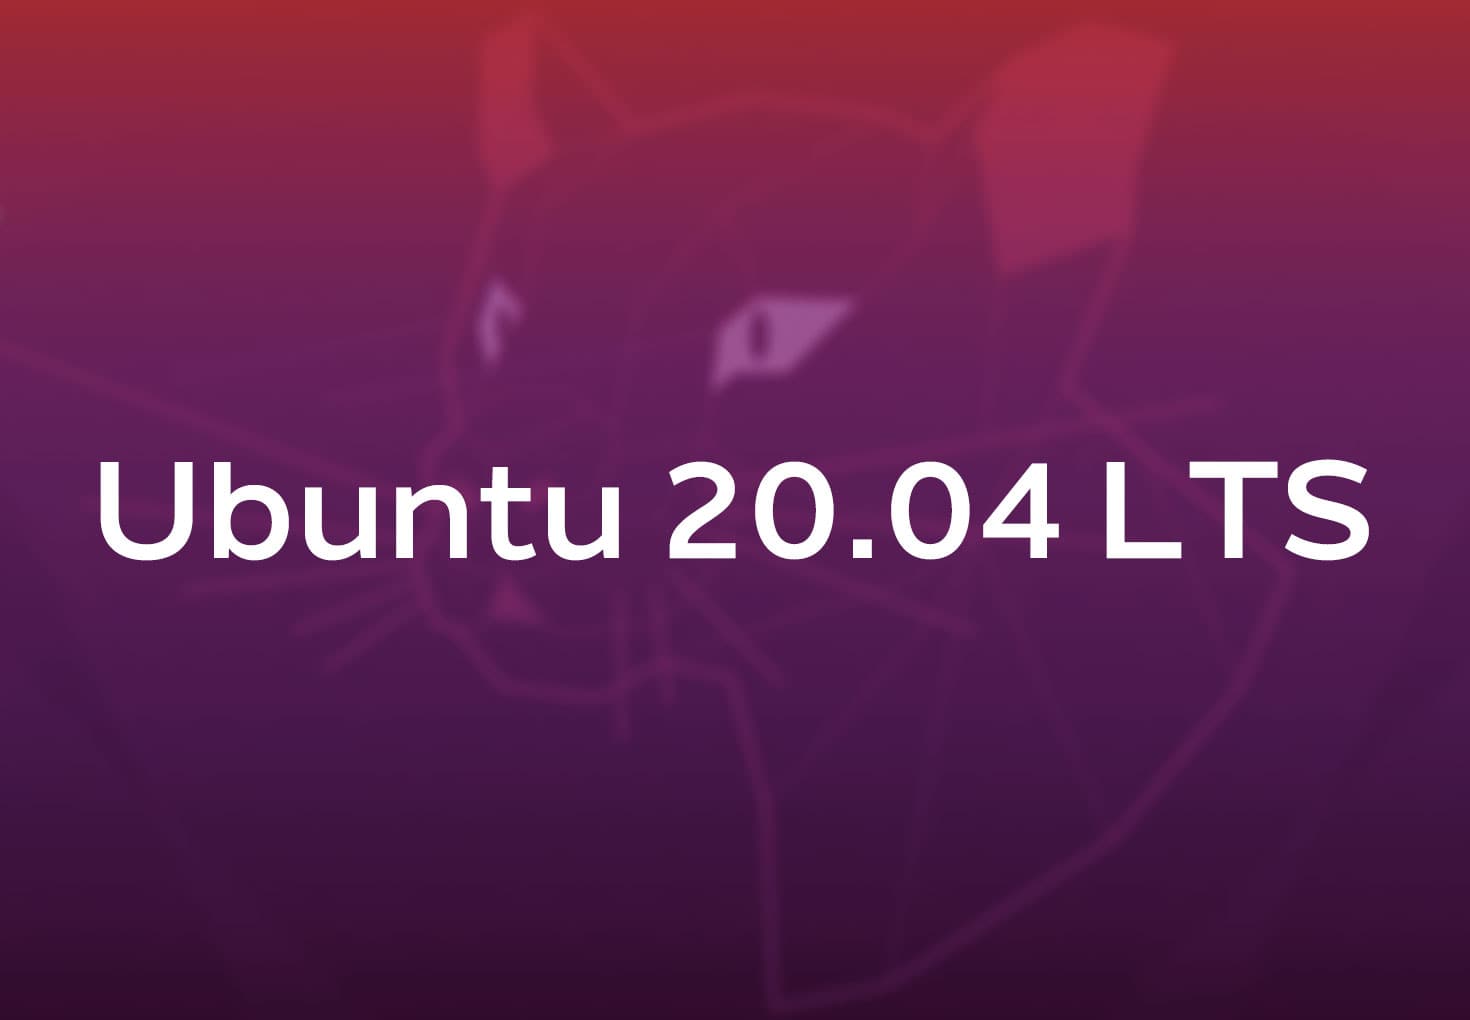 Ubuntu 20.04 LTS new features